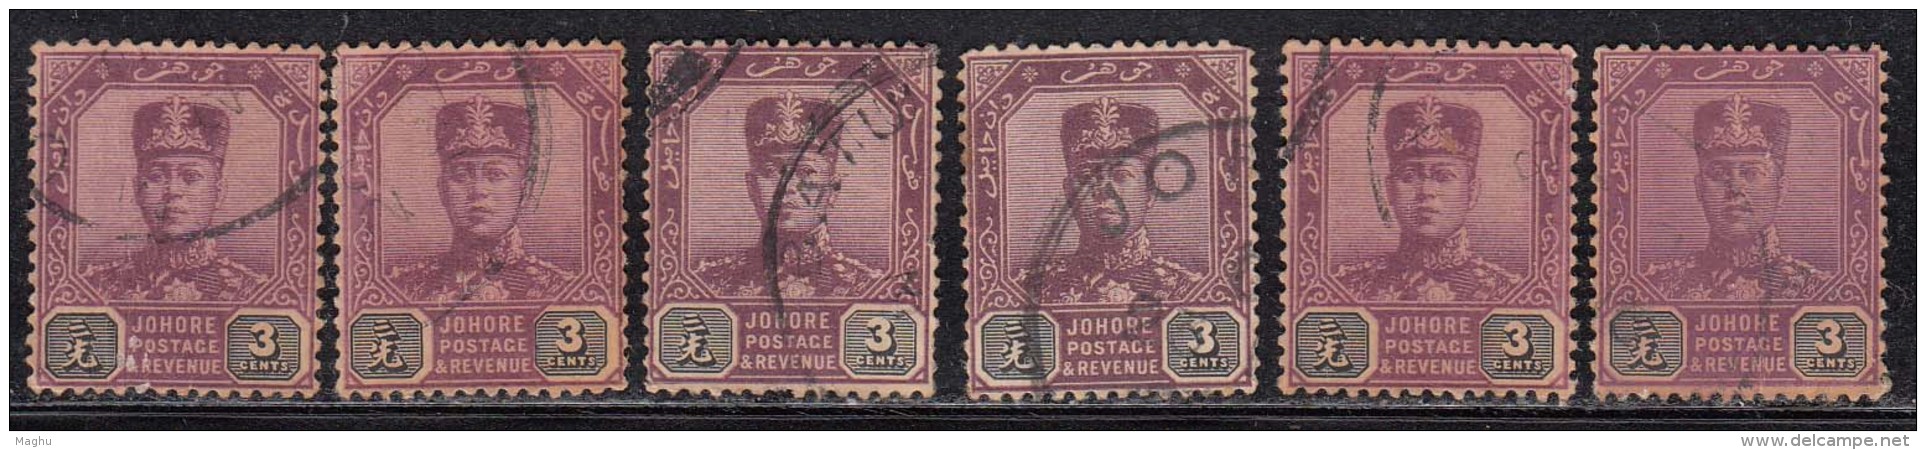 3c Shades Used Johore, 1910 Multi Rosettes, Malaya 1912 - Johore